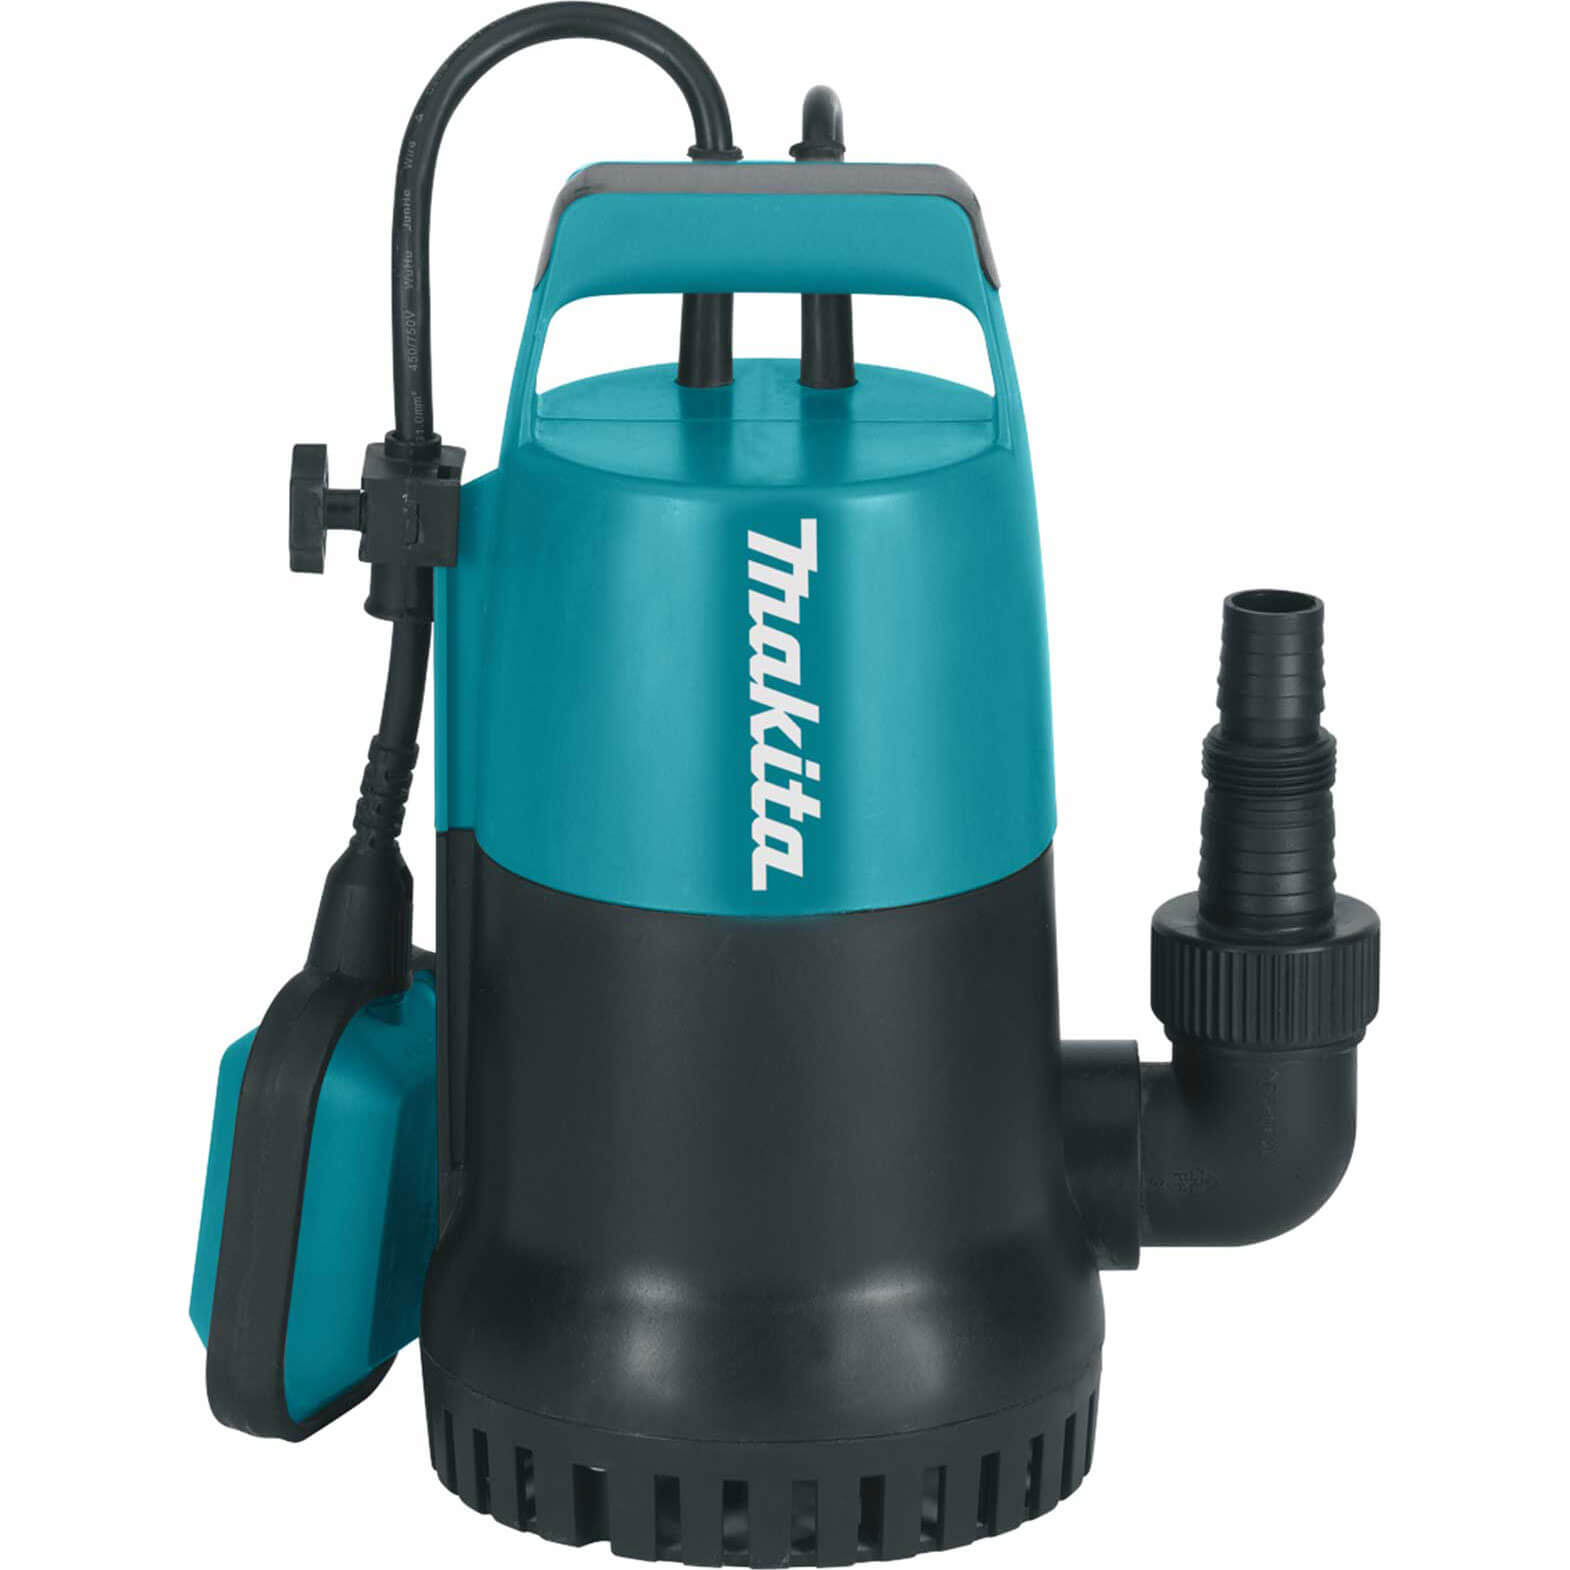 Makita Sub Pump PF0300/2 Submersible Water Pump For Clean Water 240v 